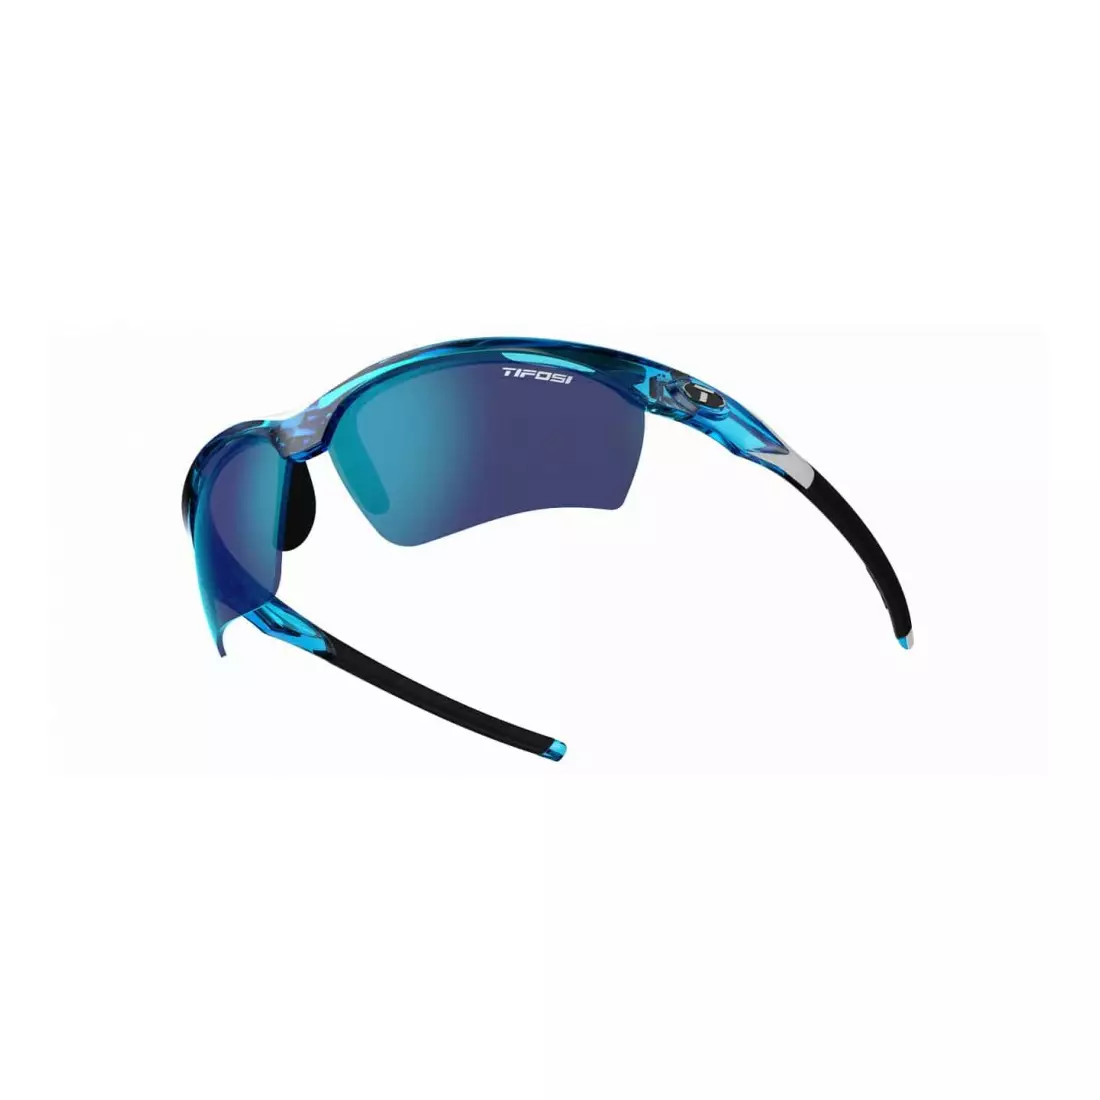 TIFOSI športové okuliare s vymeniteľnými šošovkami vero clarion skycloud (Clarion Blue, AC Red, Clear) TFI-1470107722